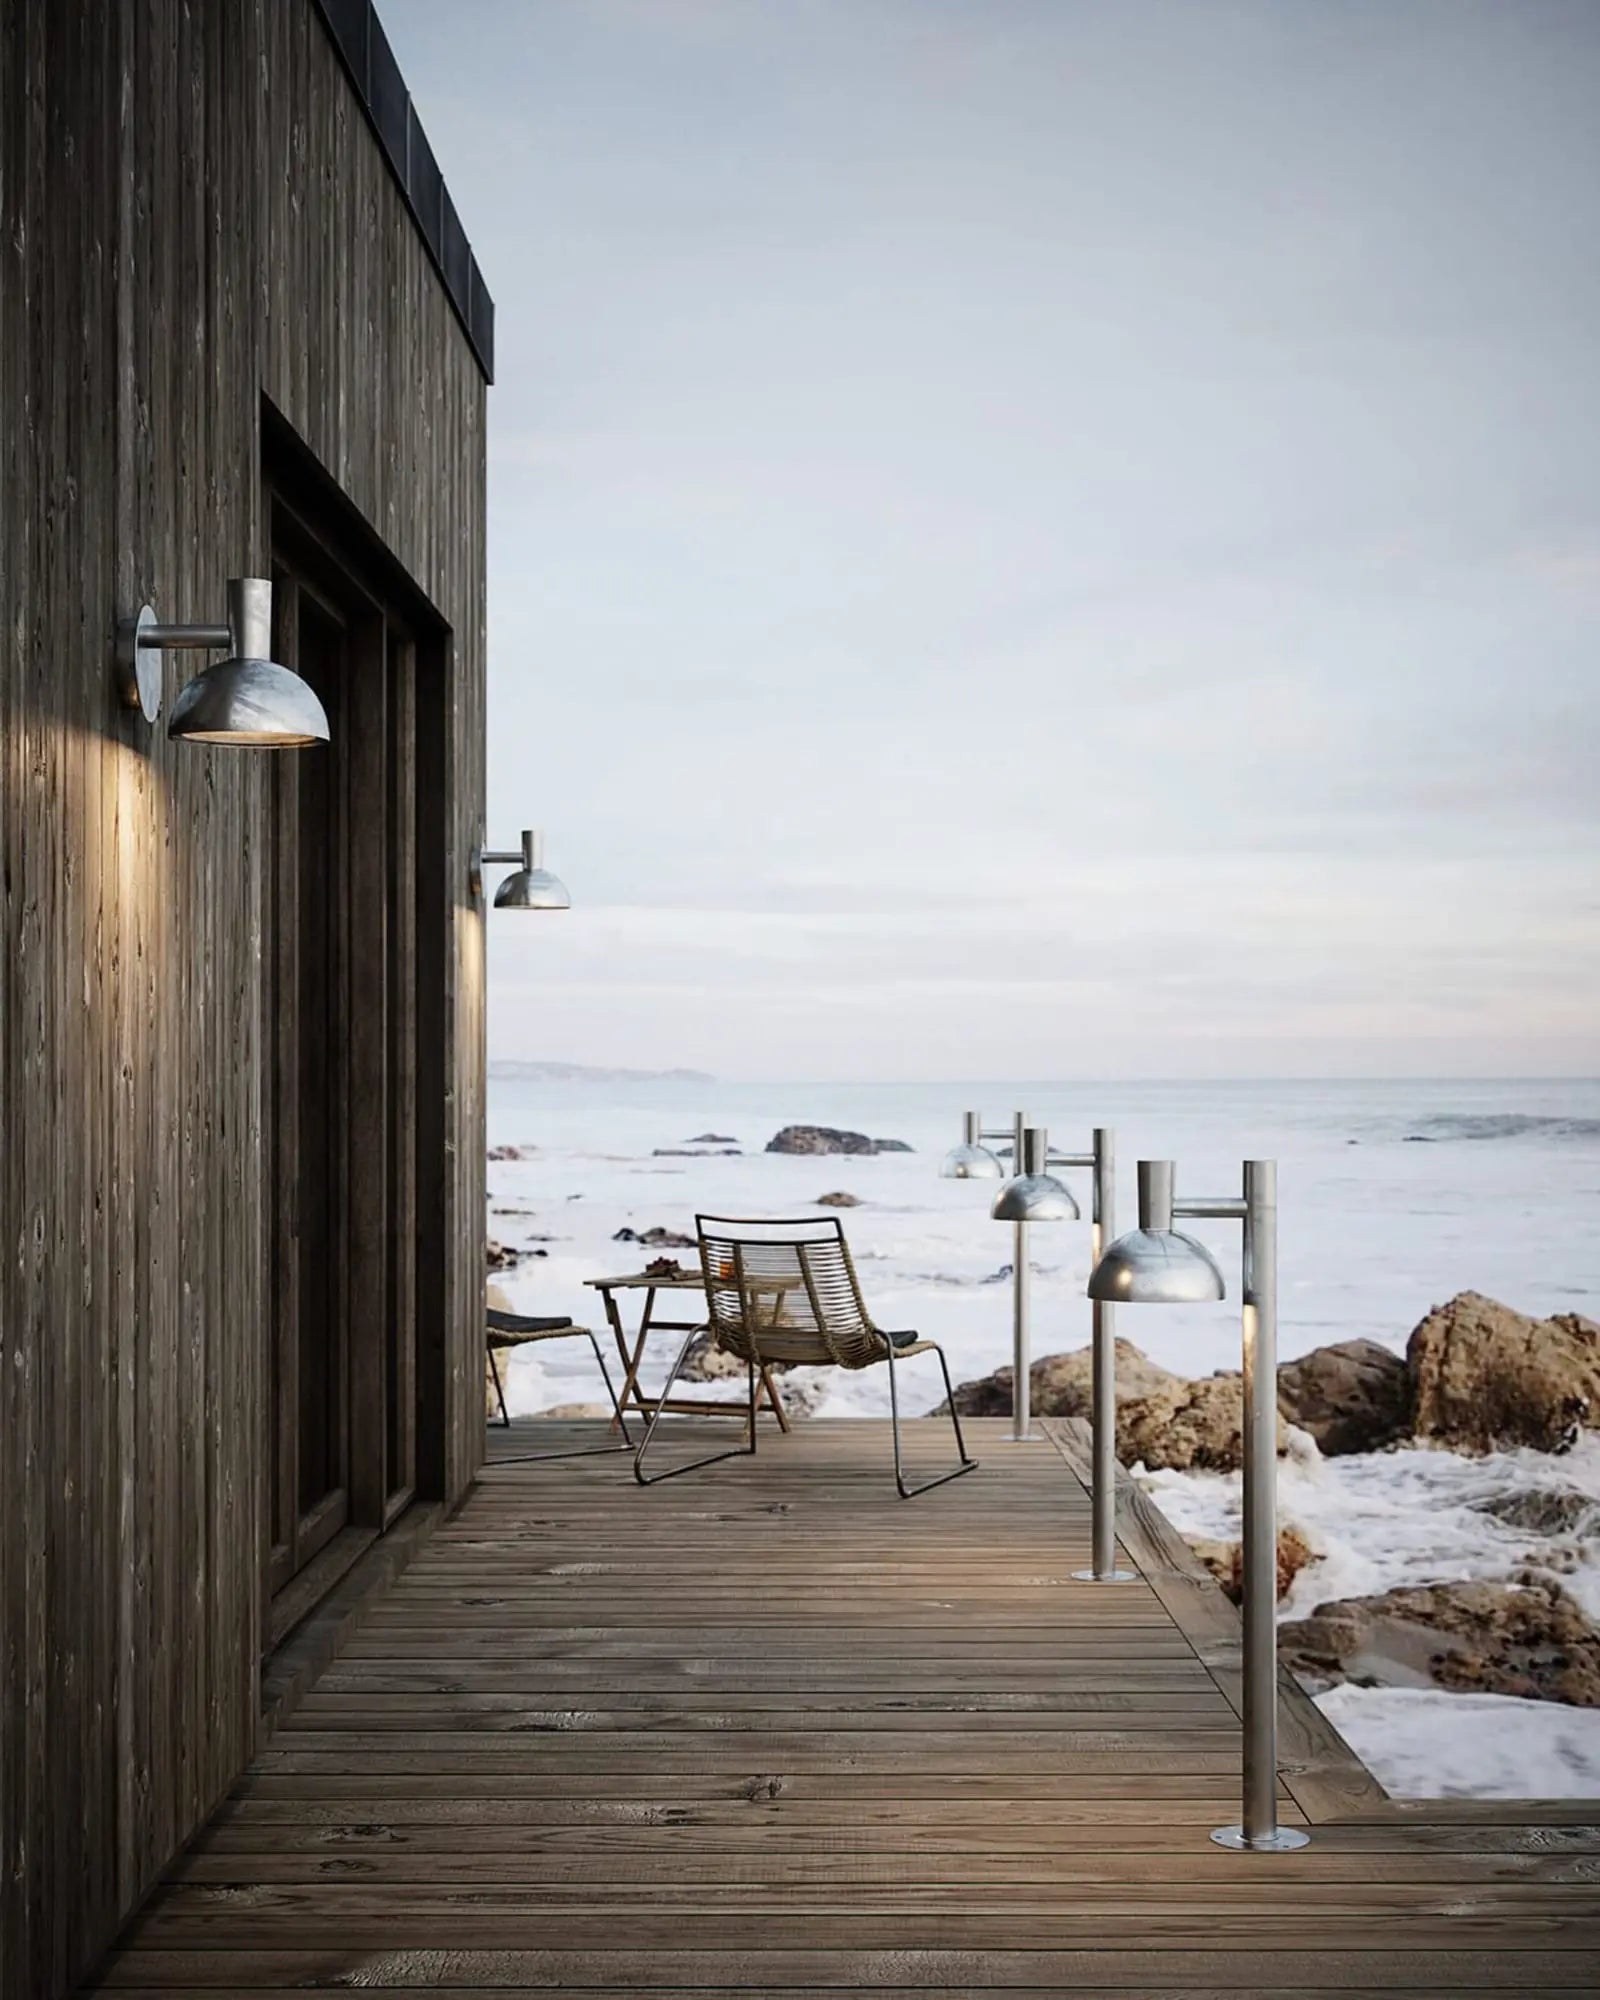 Arki outdoor Scandinavian wall light on outdoor seaside